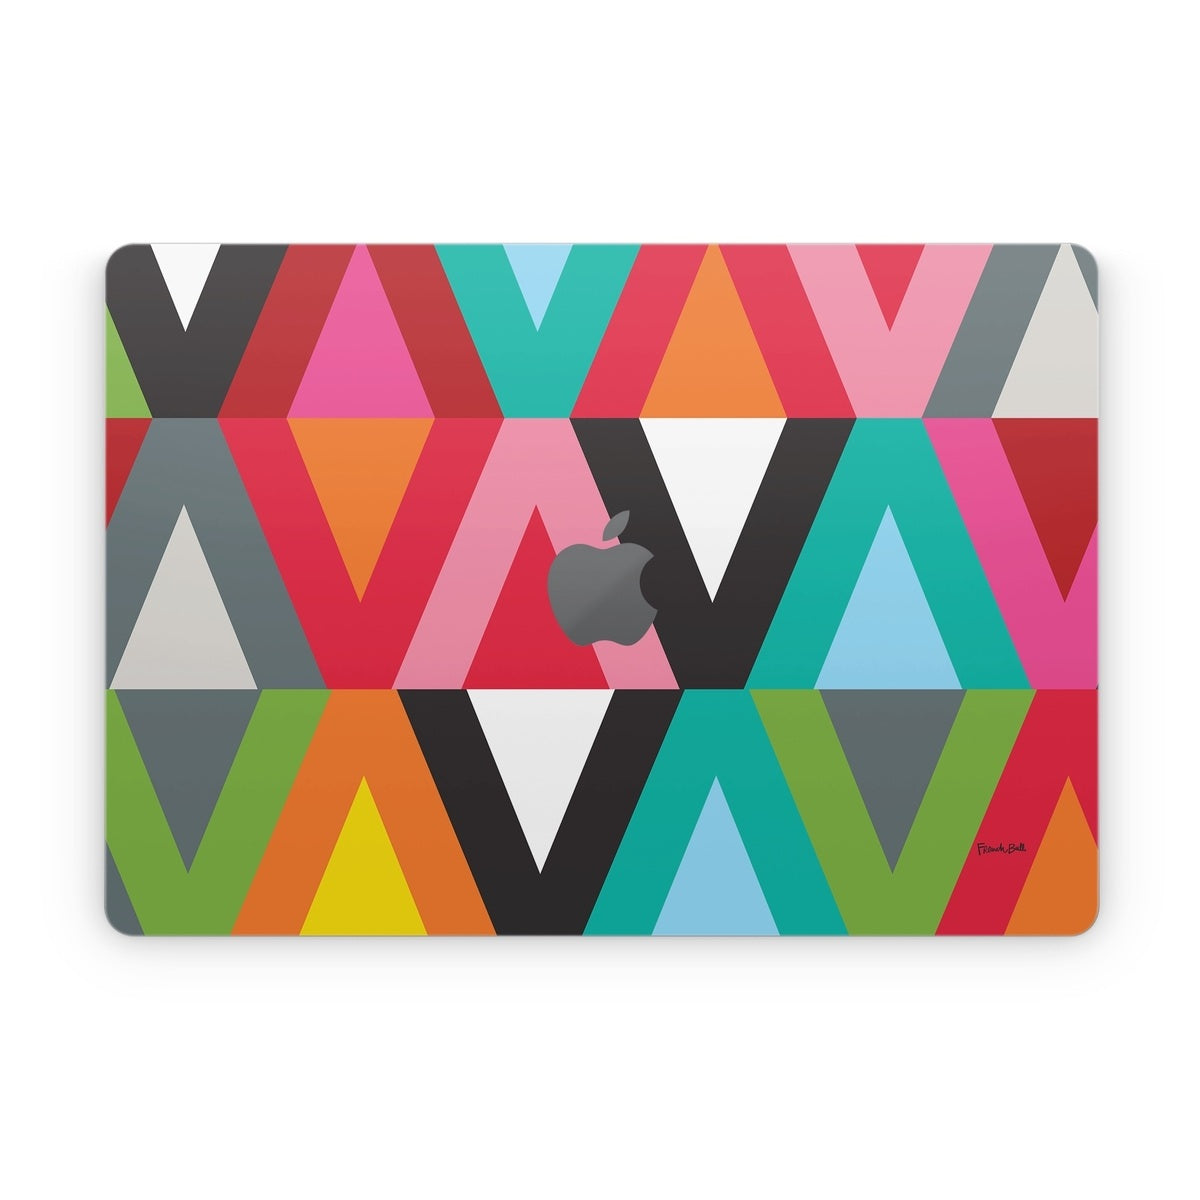 Viva - Apple MacBook Skin